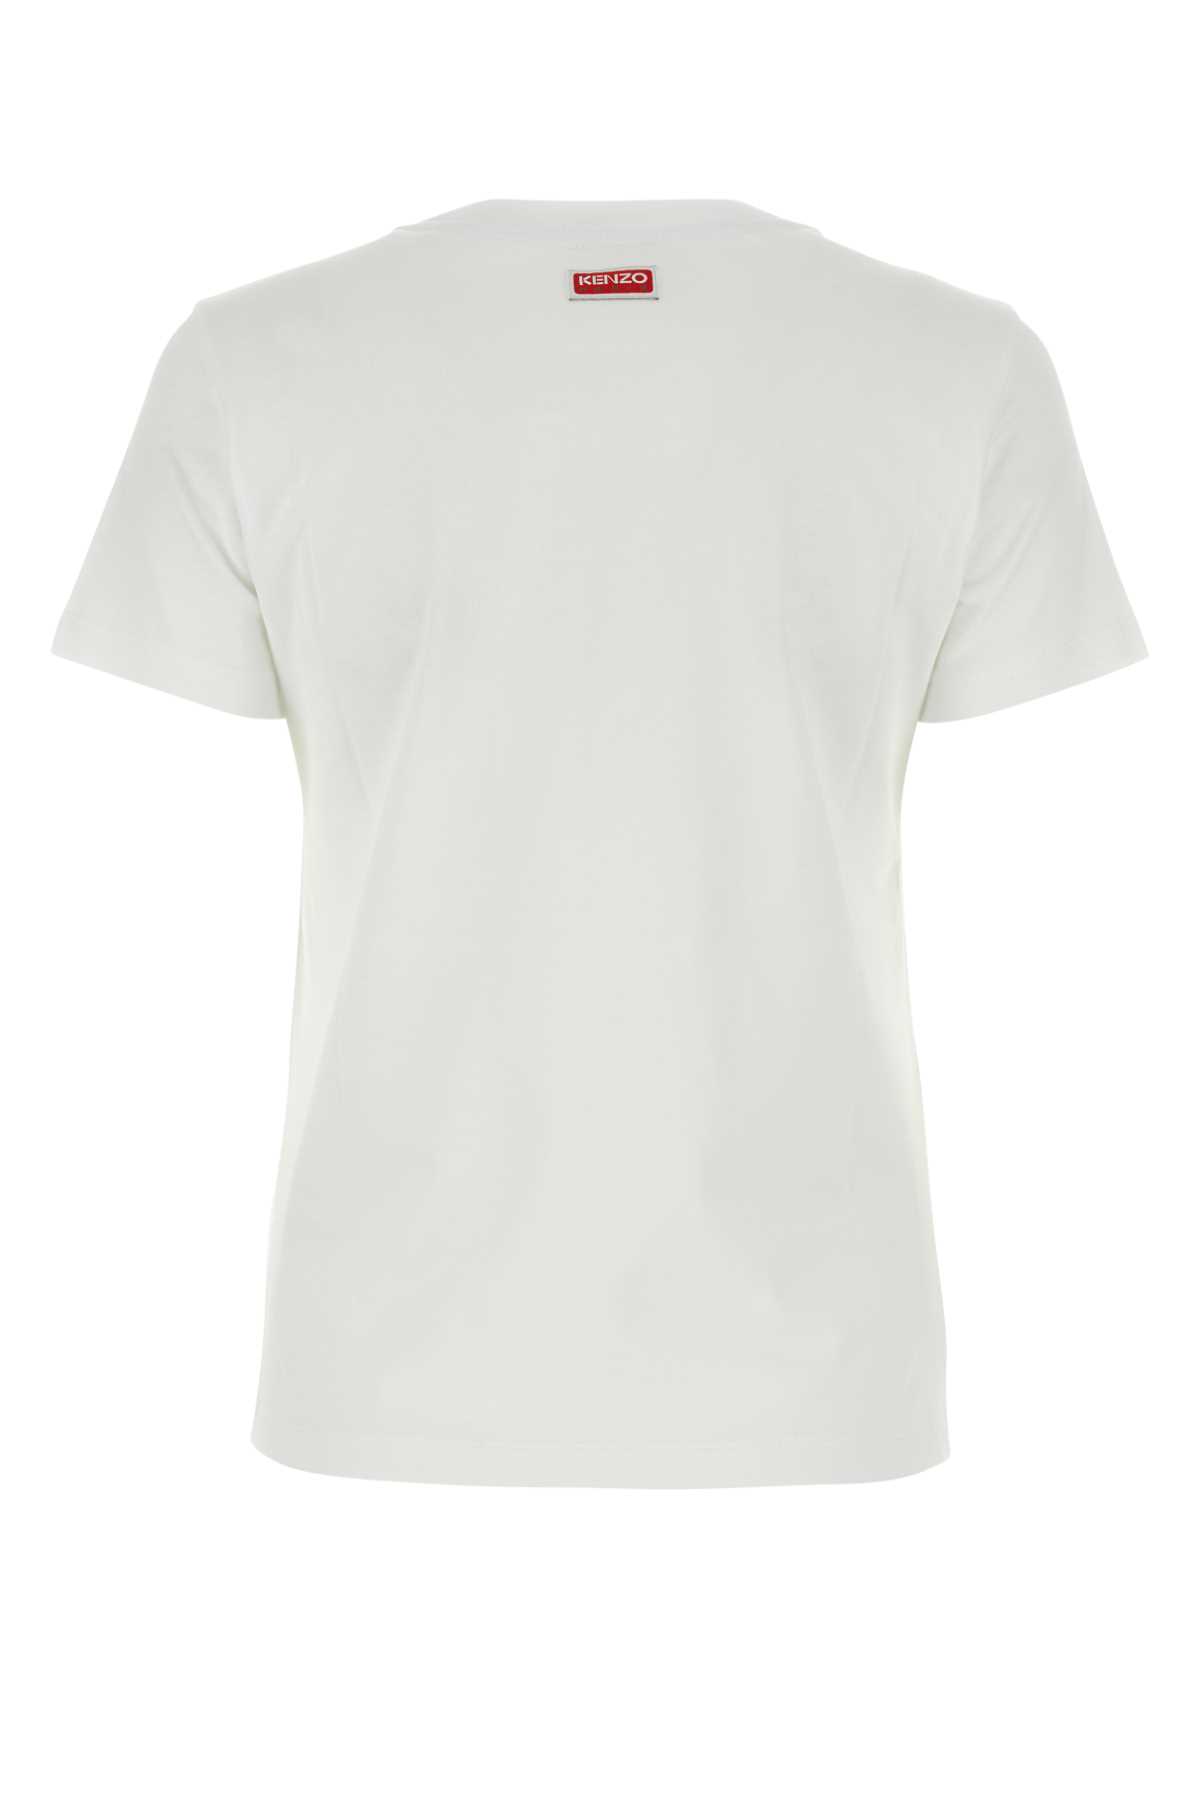 Kenzo White Cotton T-shirt In 02